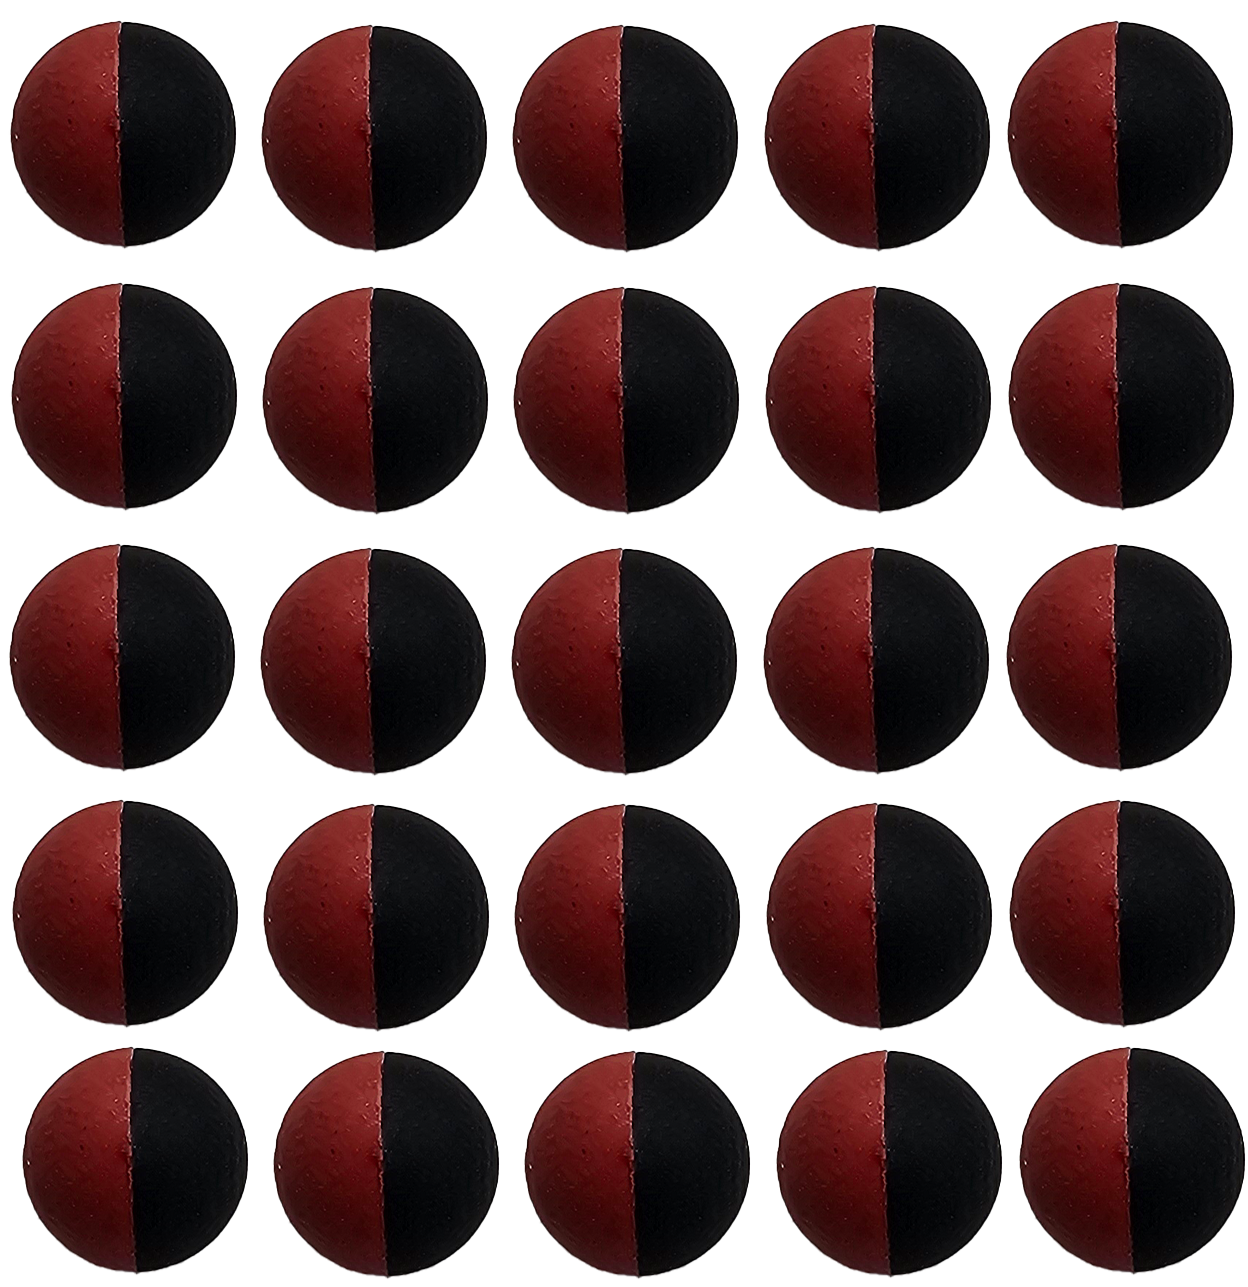 43 CAL PEPPER BALLS LESS LETHAL PEPPER FILLED BALL Black-Red